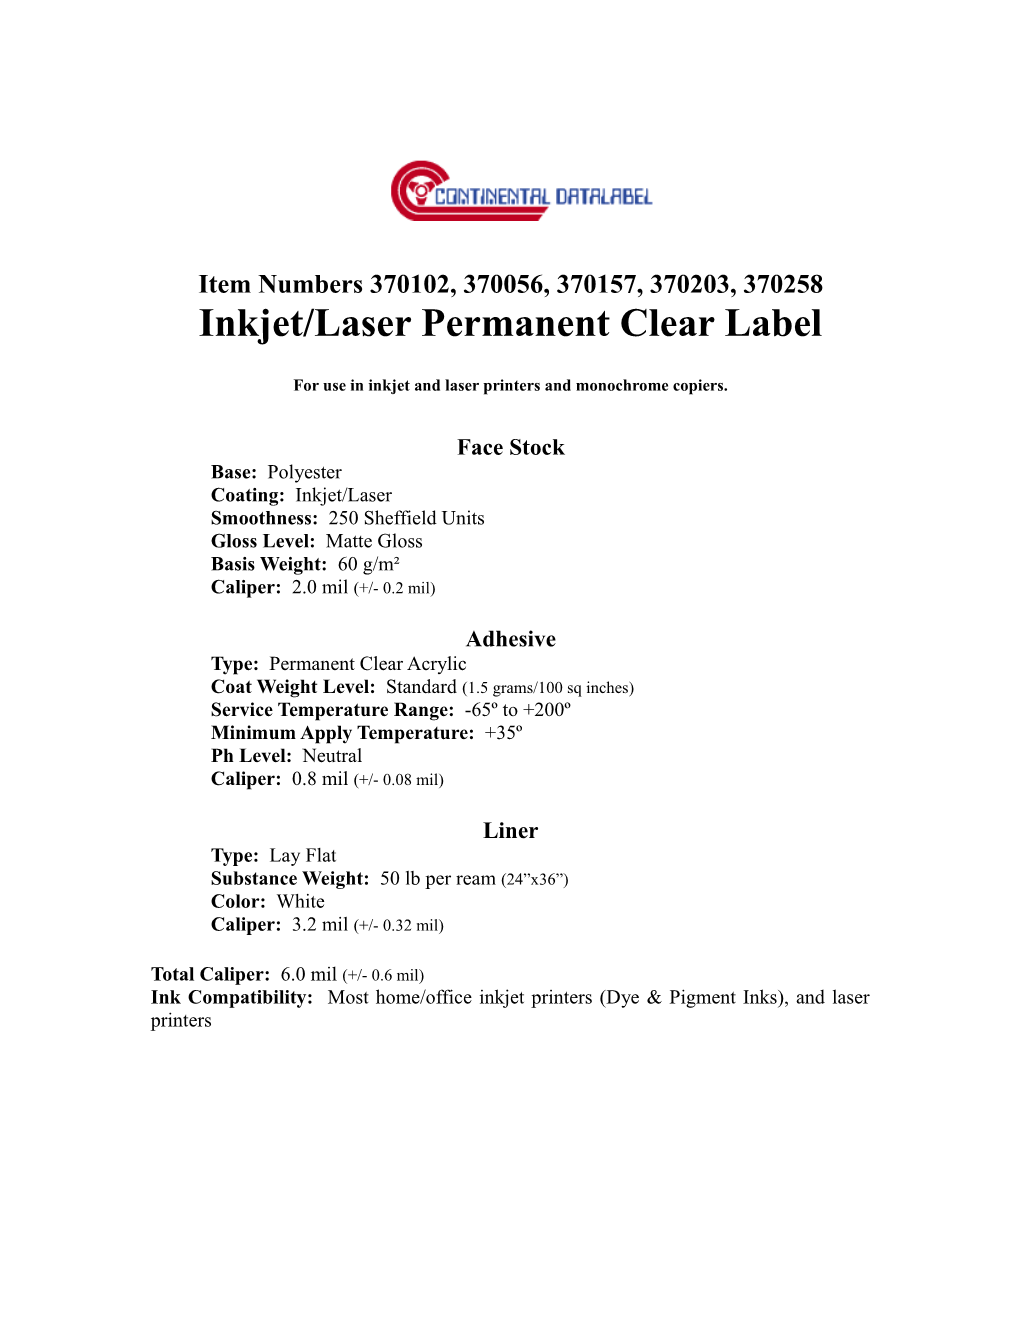 Inkjet/Laser Permanent Clear Label